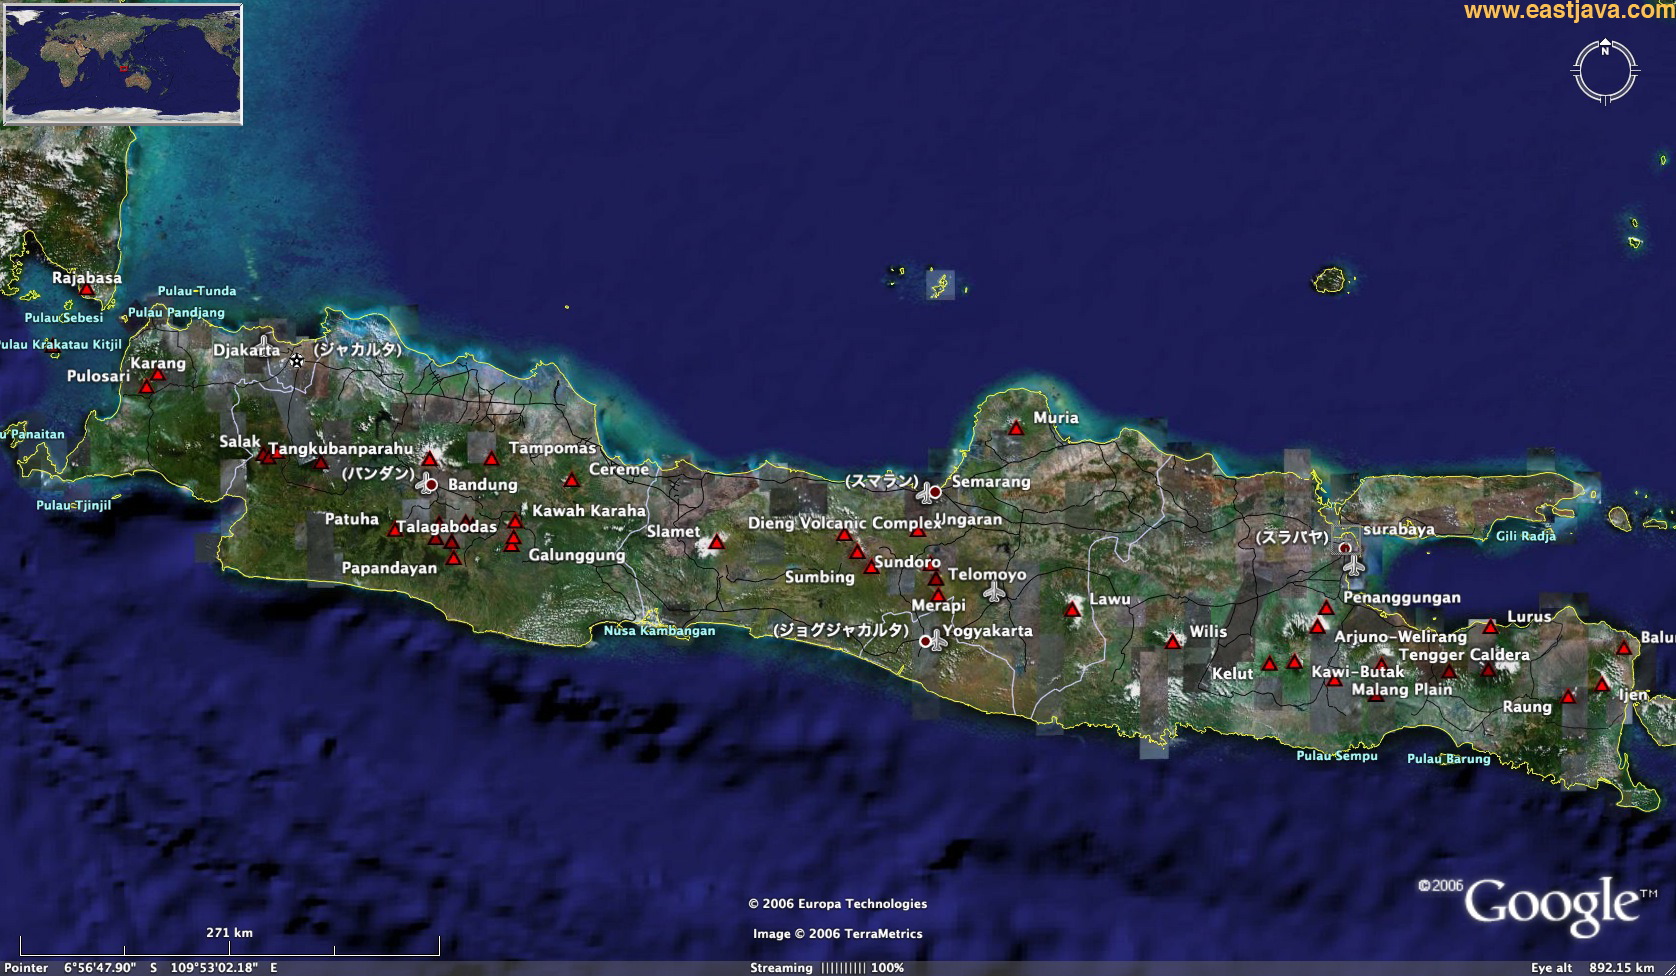 World Map Java Island